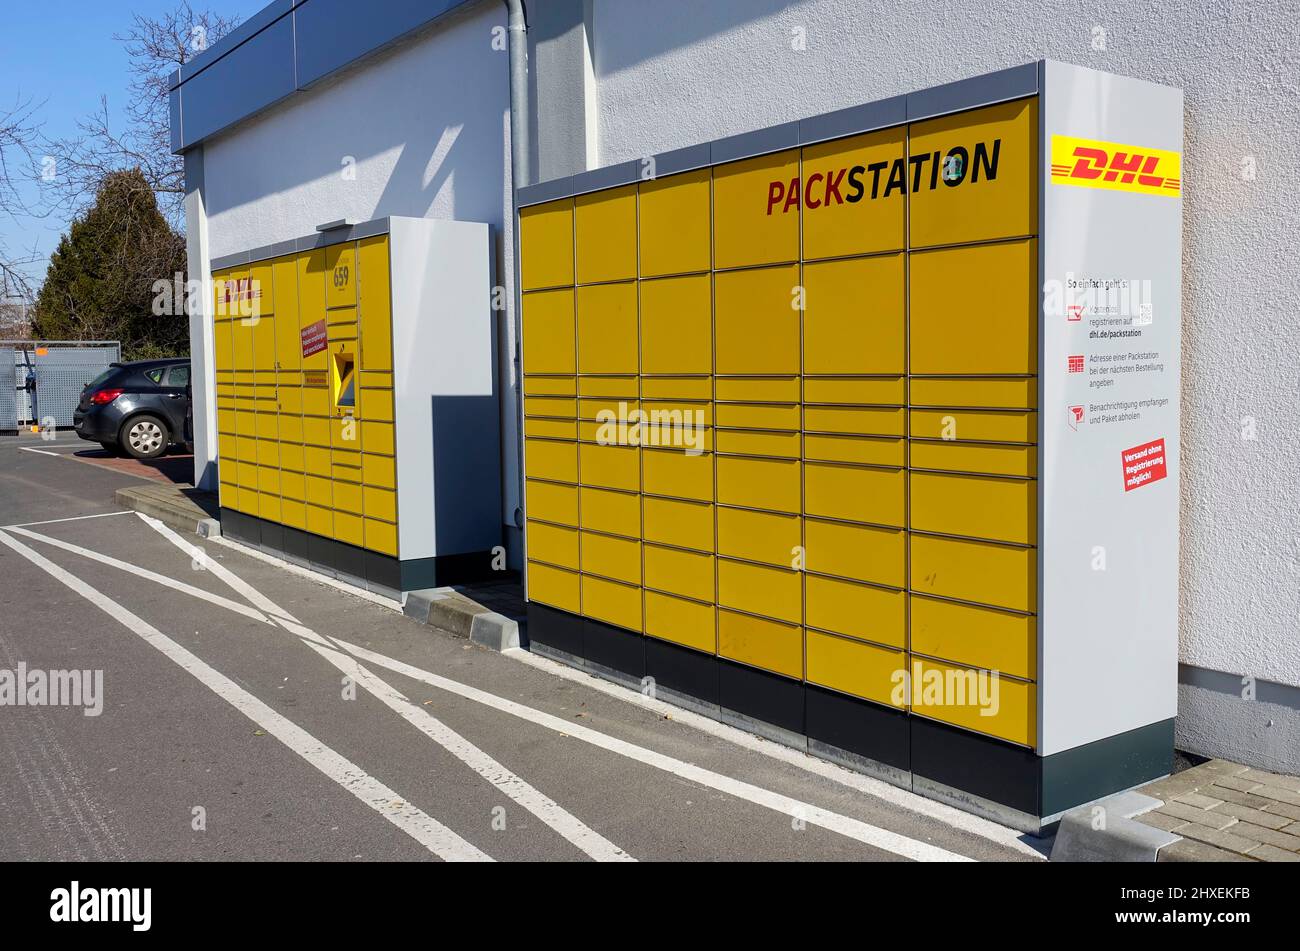 DHL Packstation, Berlin, Germany Stock Photo - Alamy